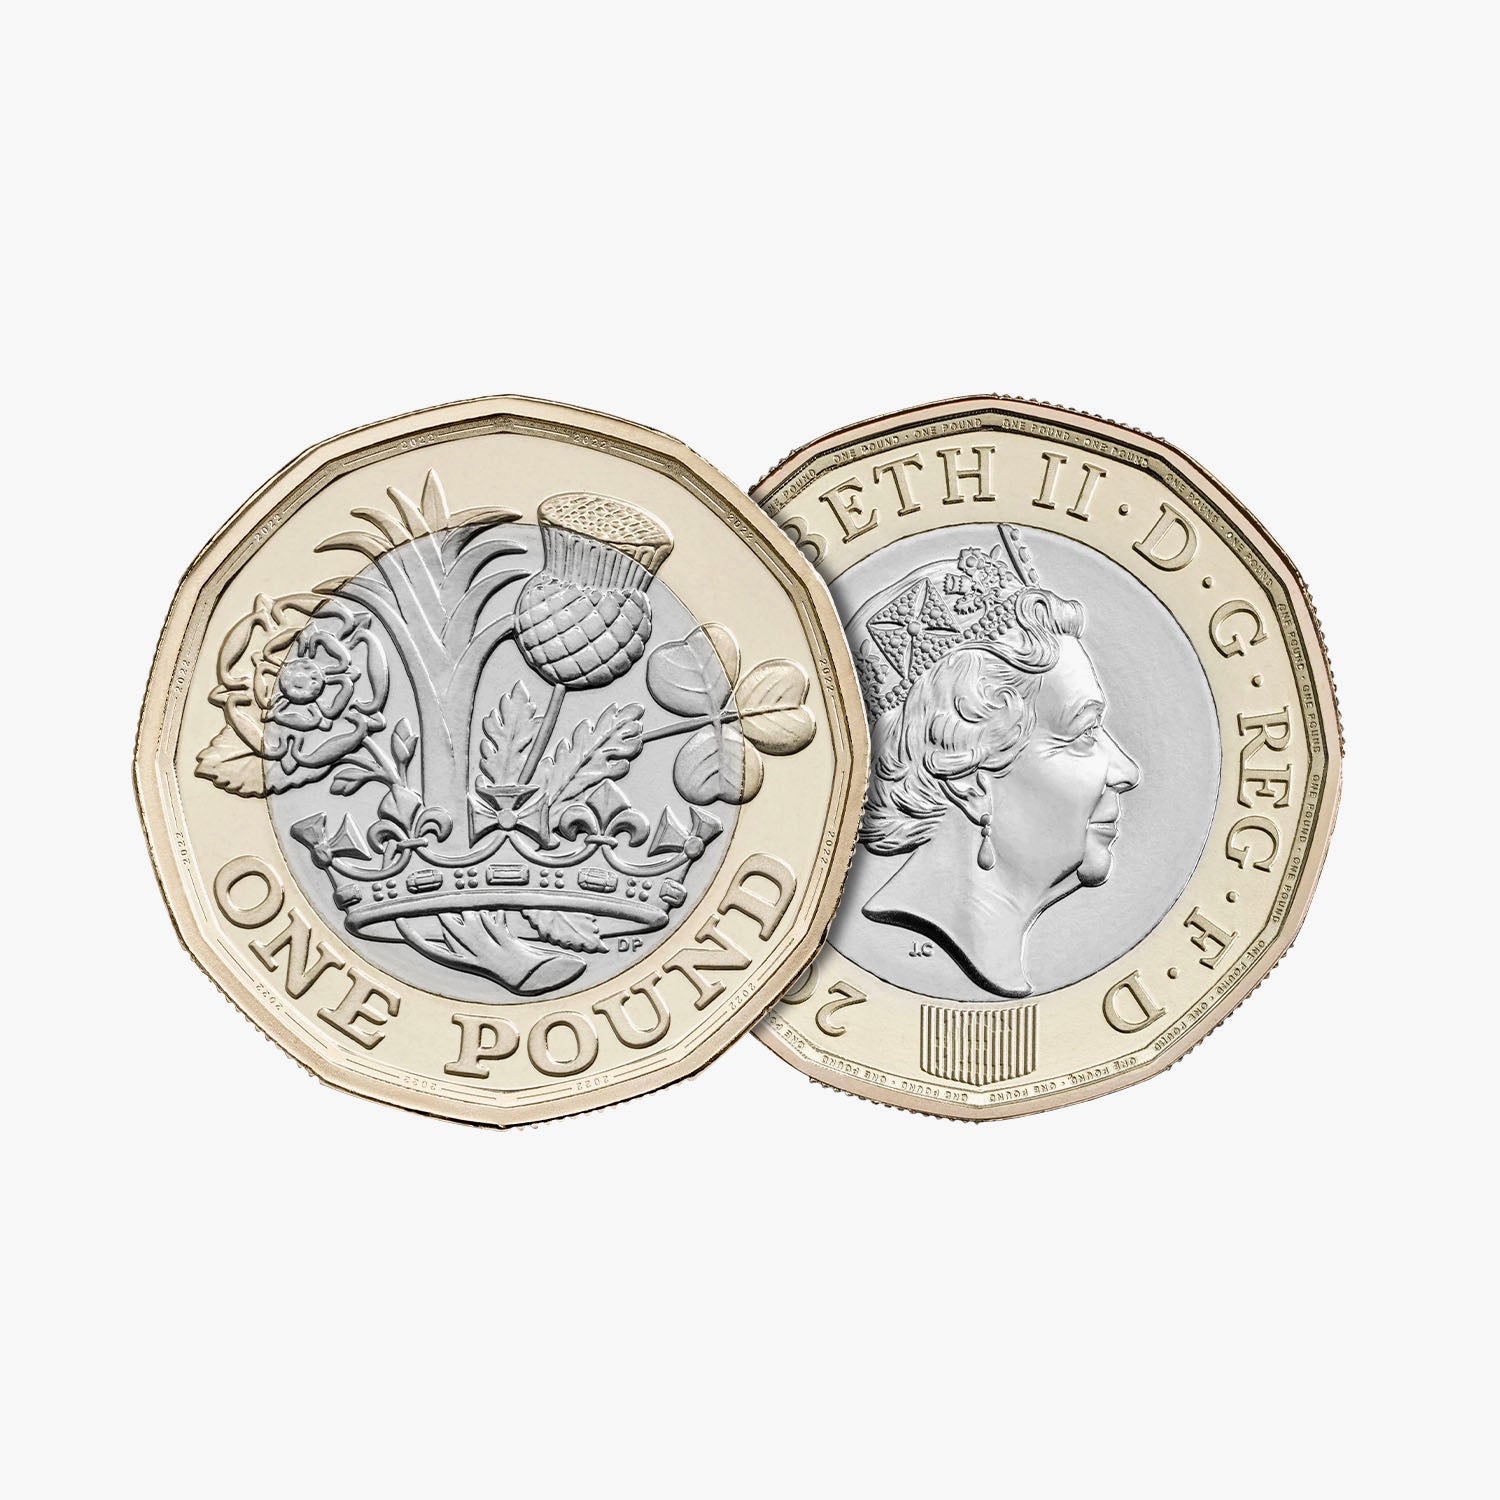 The 2022 United Kingdom Brilliant Uncirculated Definitive Coin Set